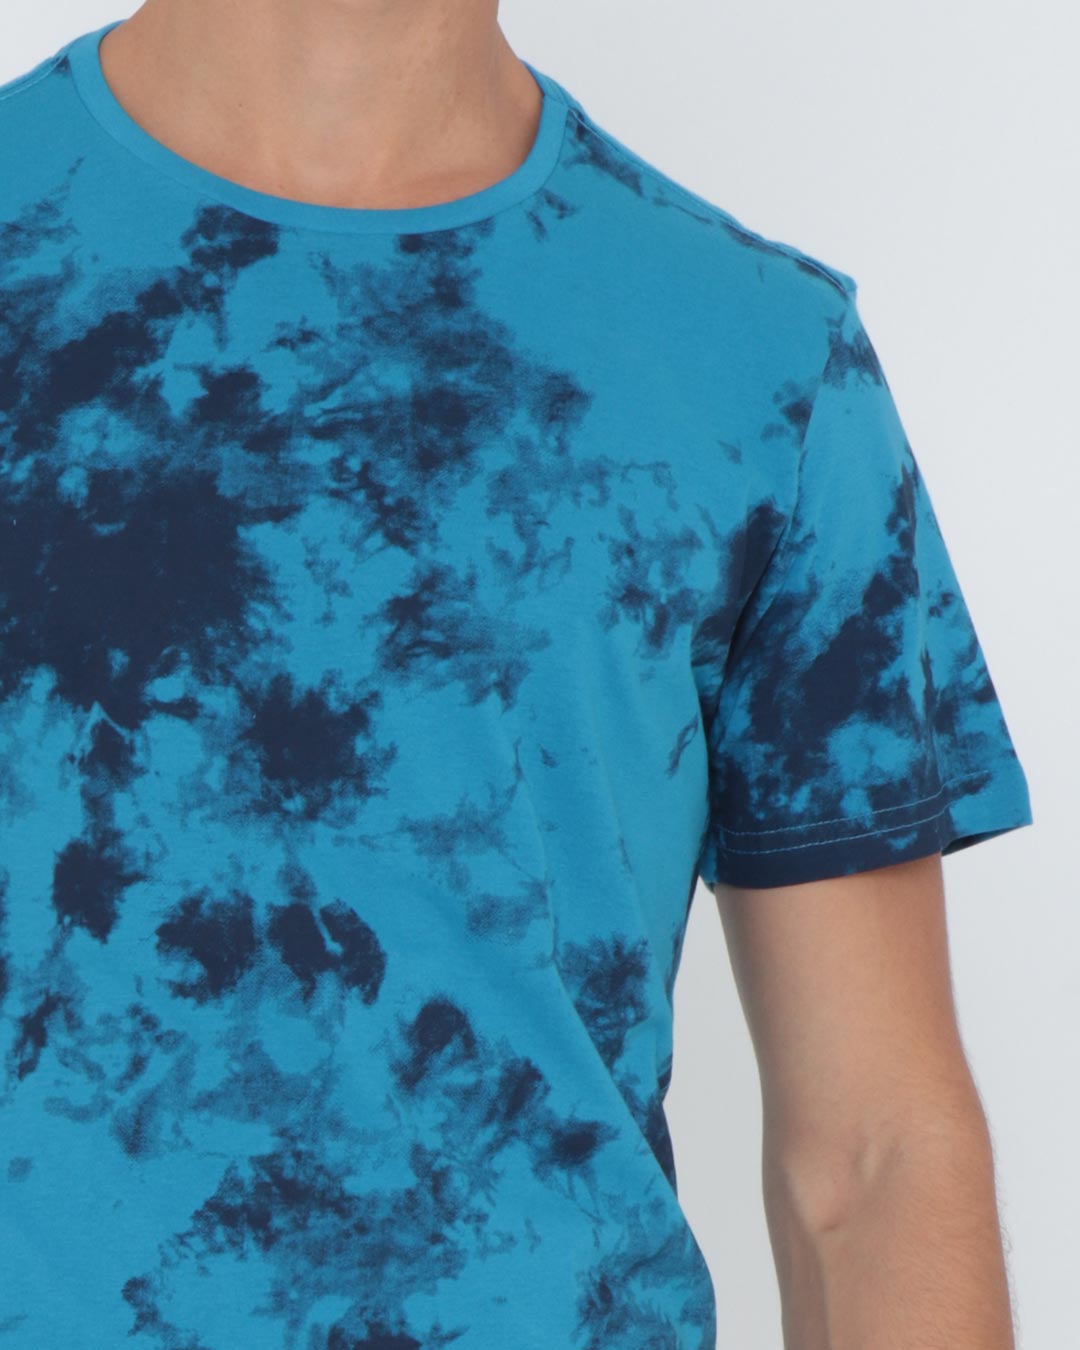 Camiseta-11985-Tie-Dye-Urbano---Azul-Medio